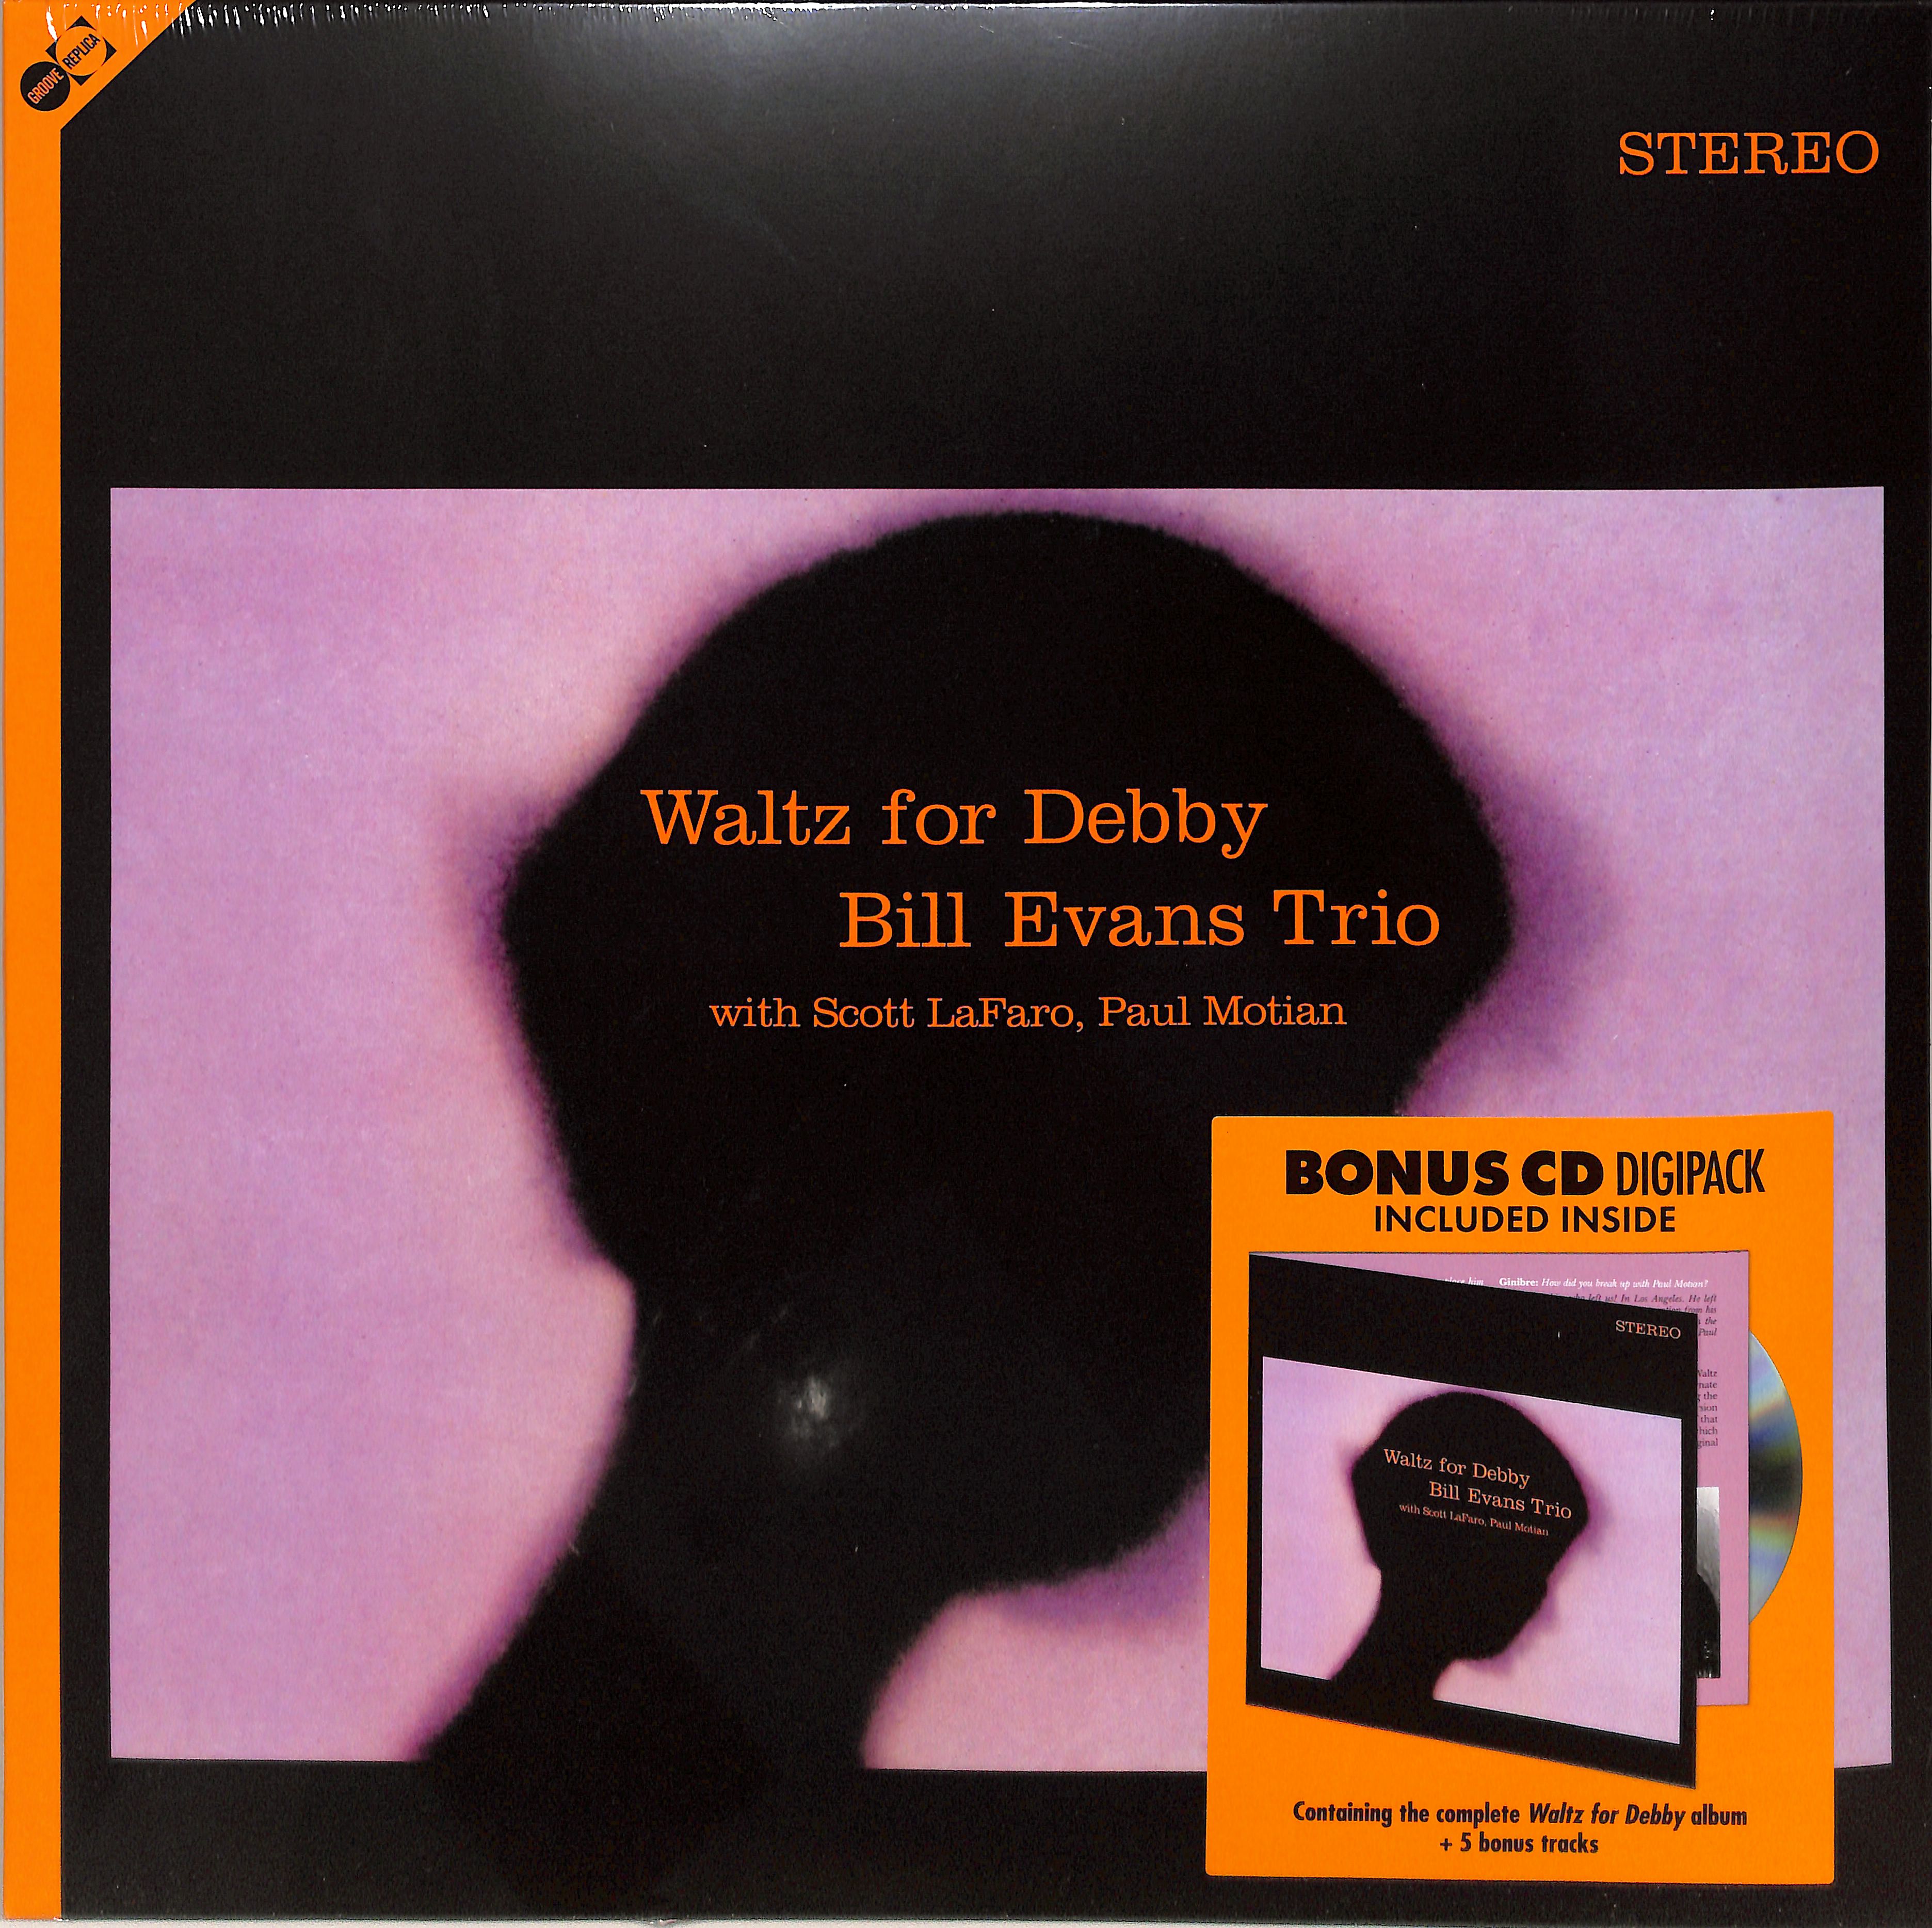 Bill Evans Trio - waltz for debby (lp + cd)